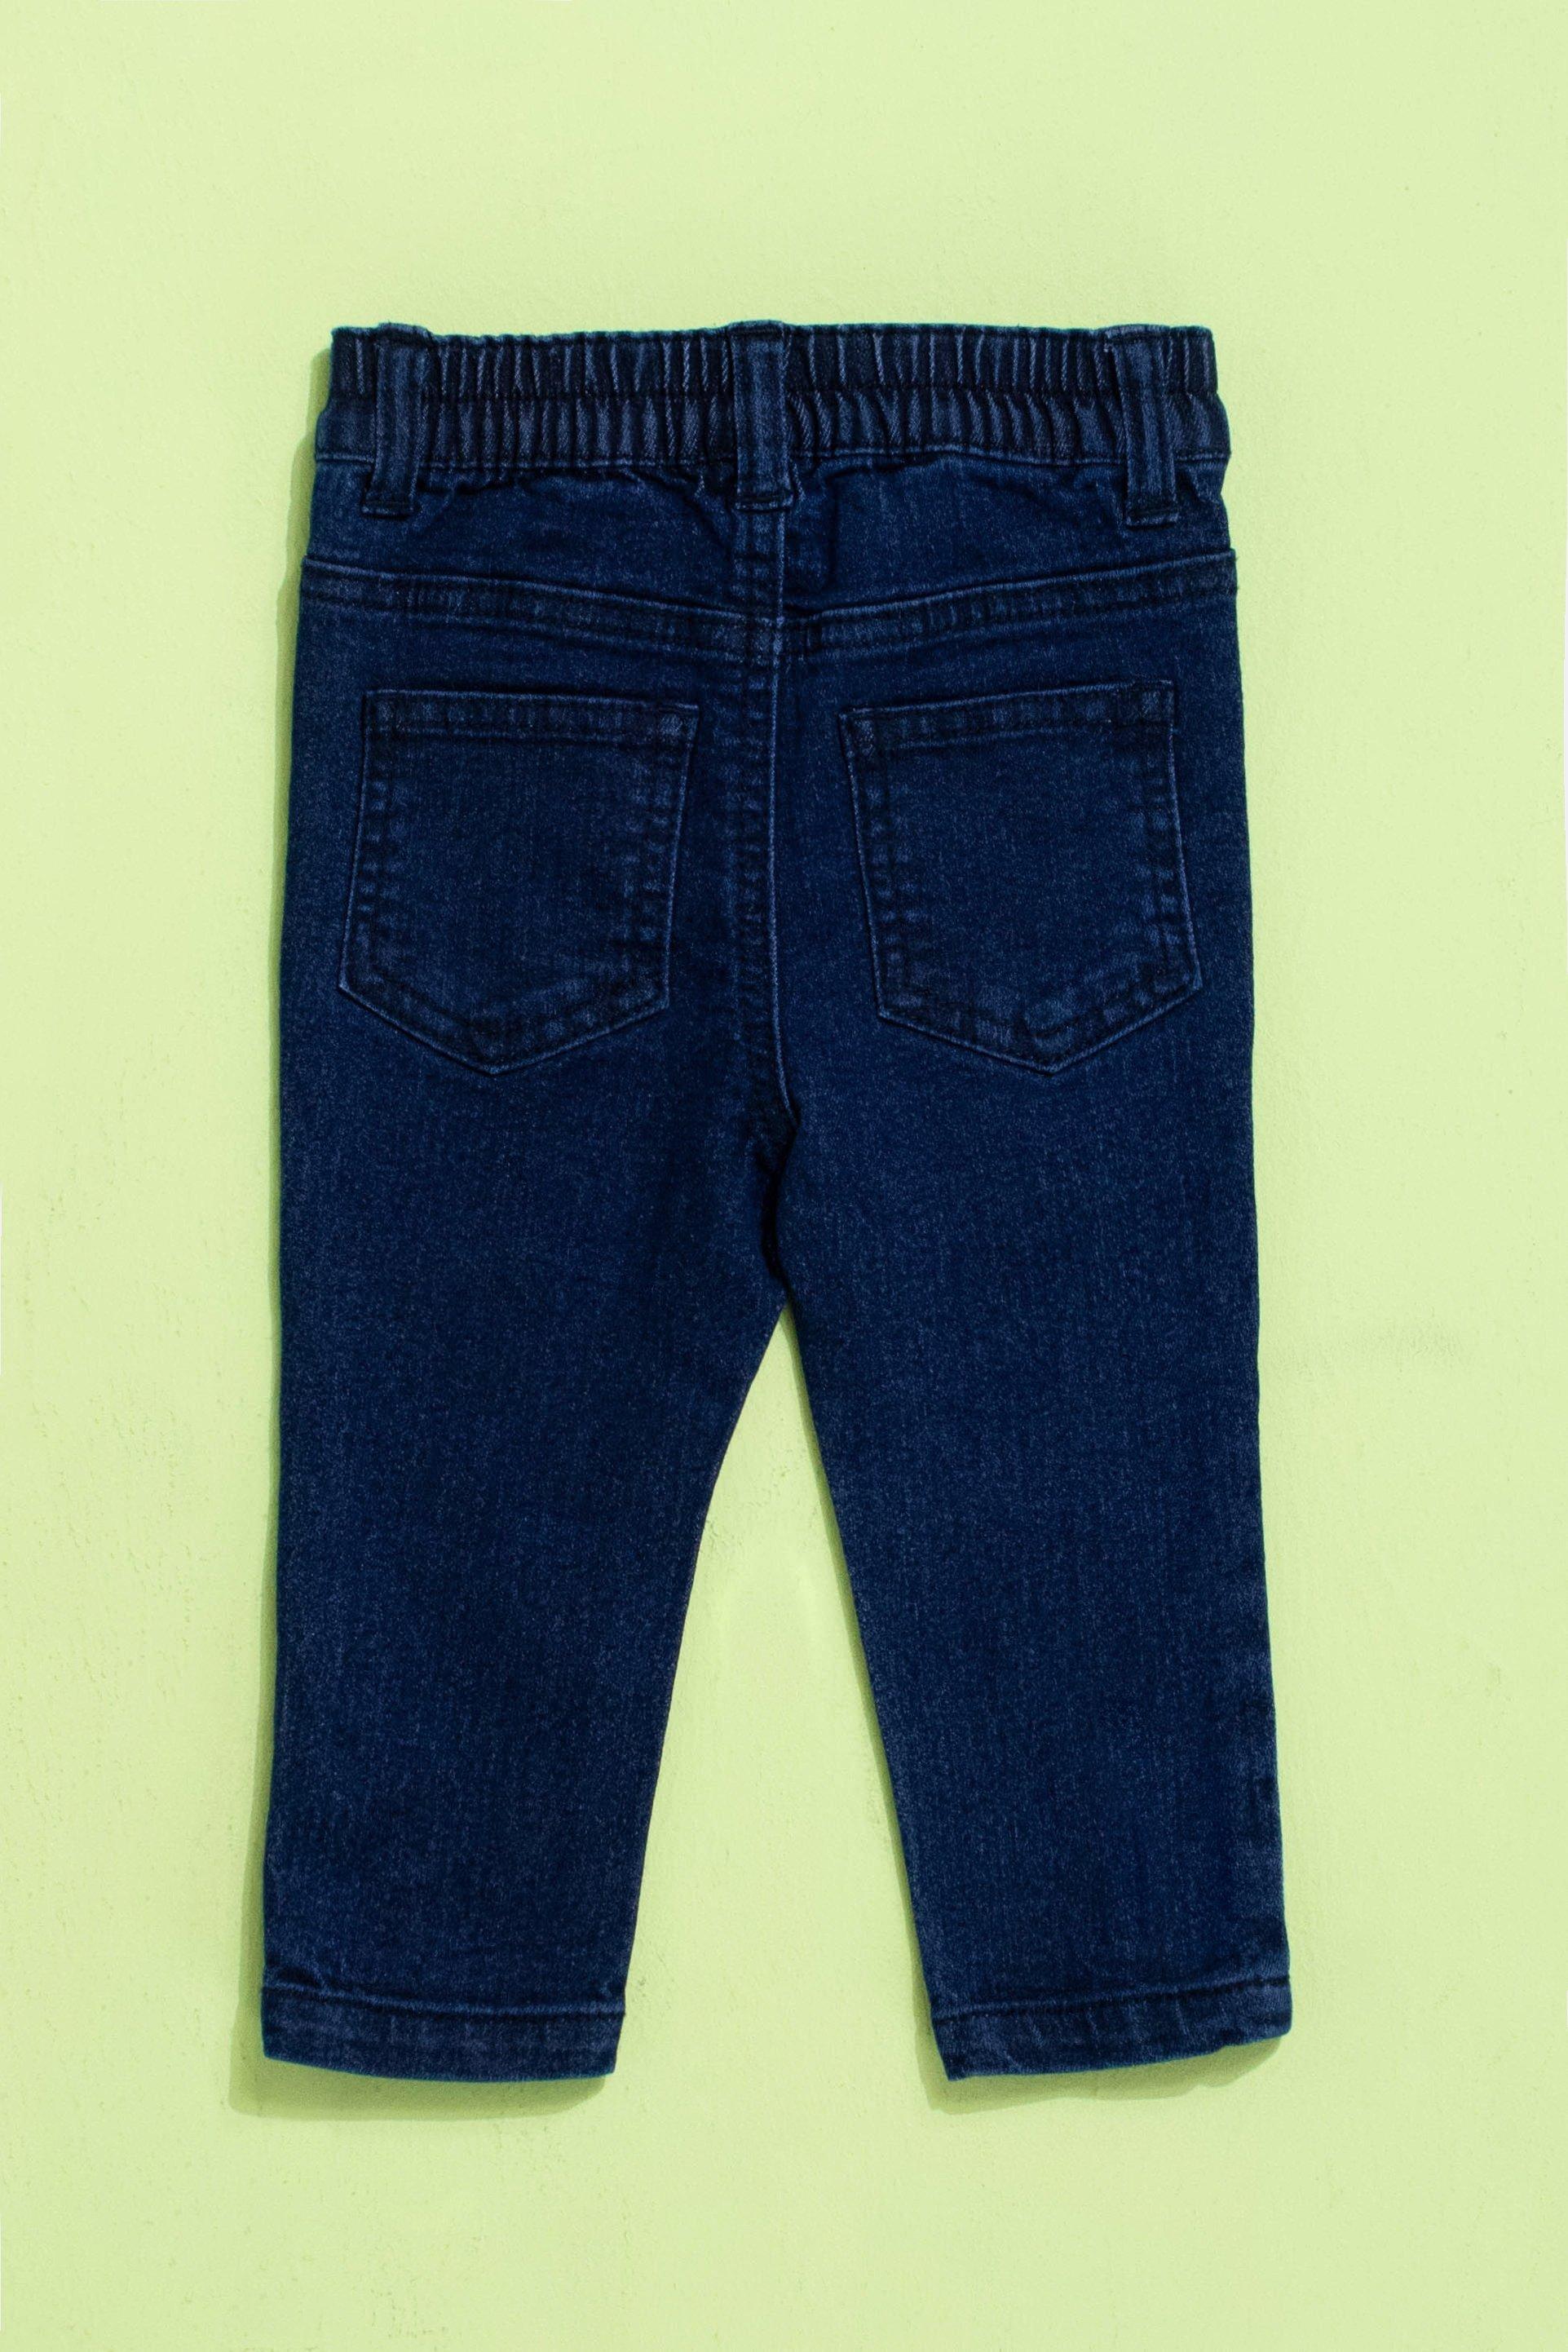 12-18M Blue Stonewash Denim Jeans - Mr Price - Petit Fox